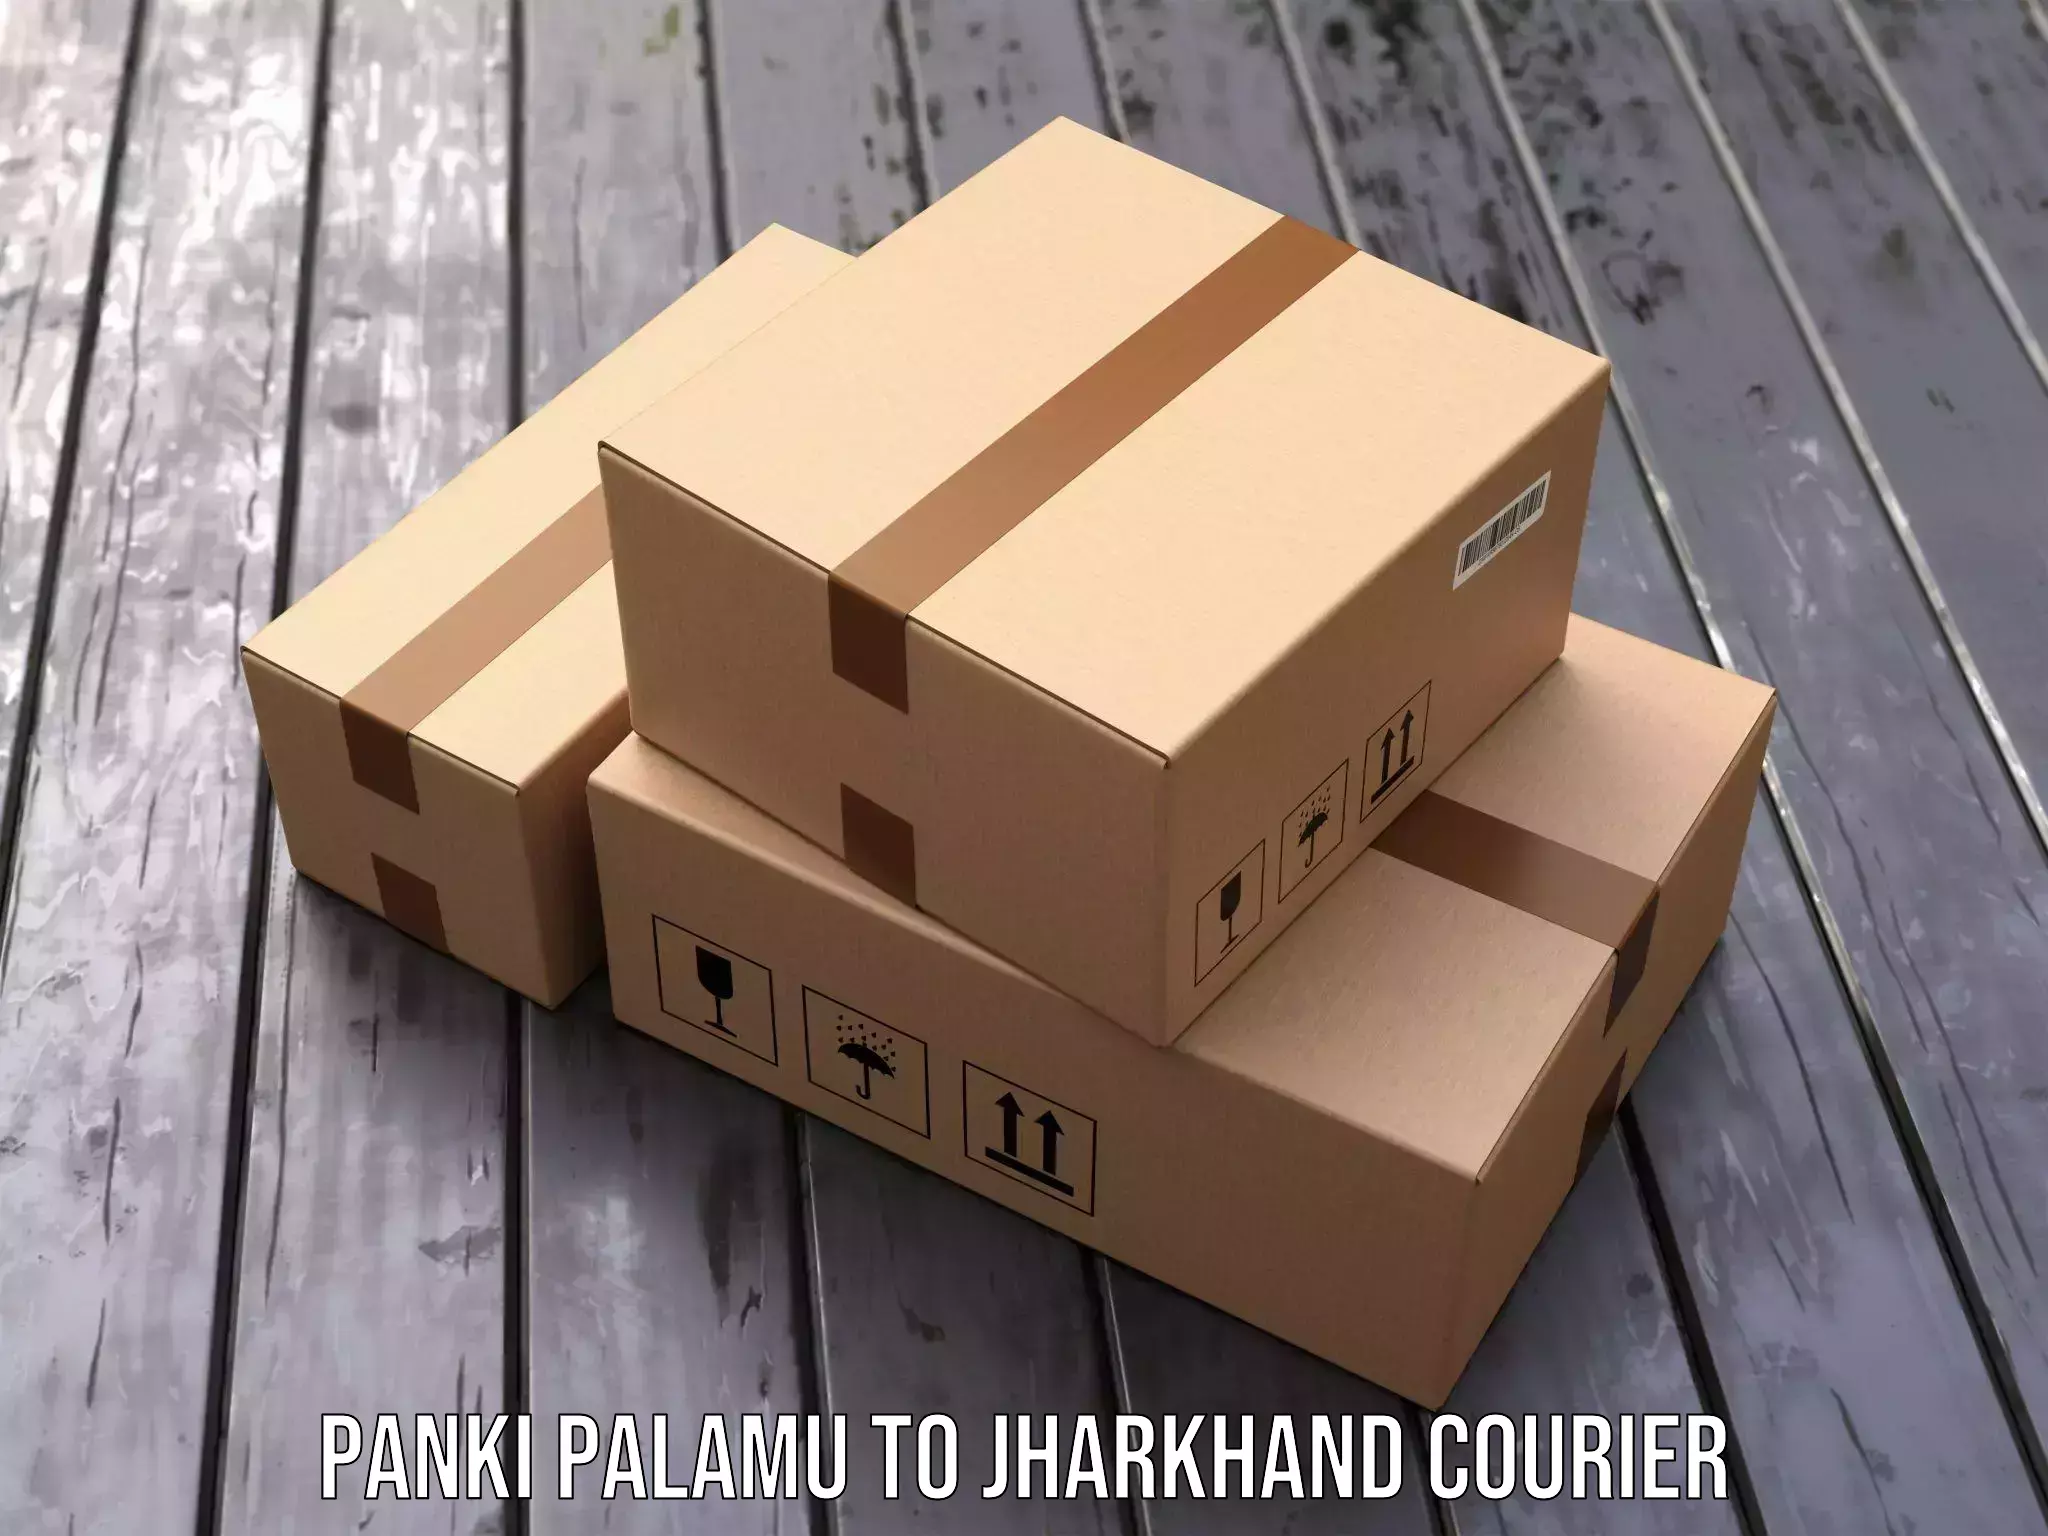 Courier service comparison in Panki Palamu to Khalari Ranchi